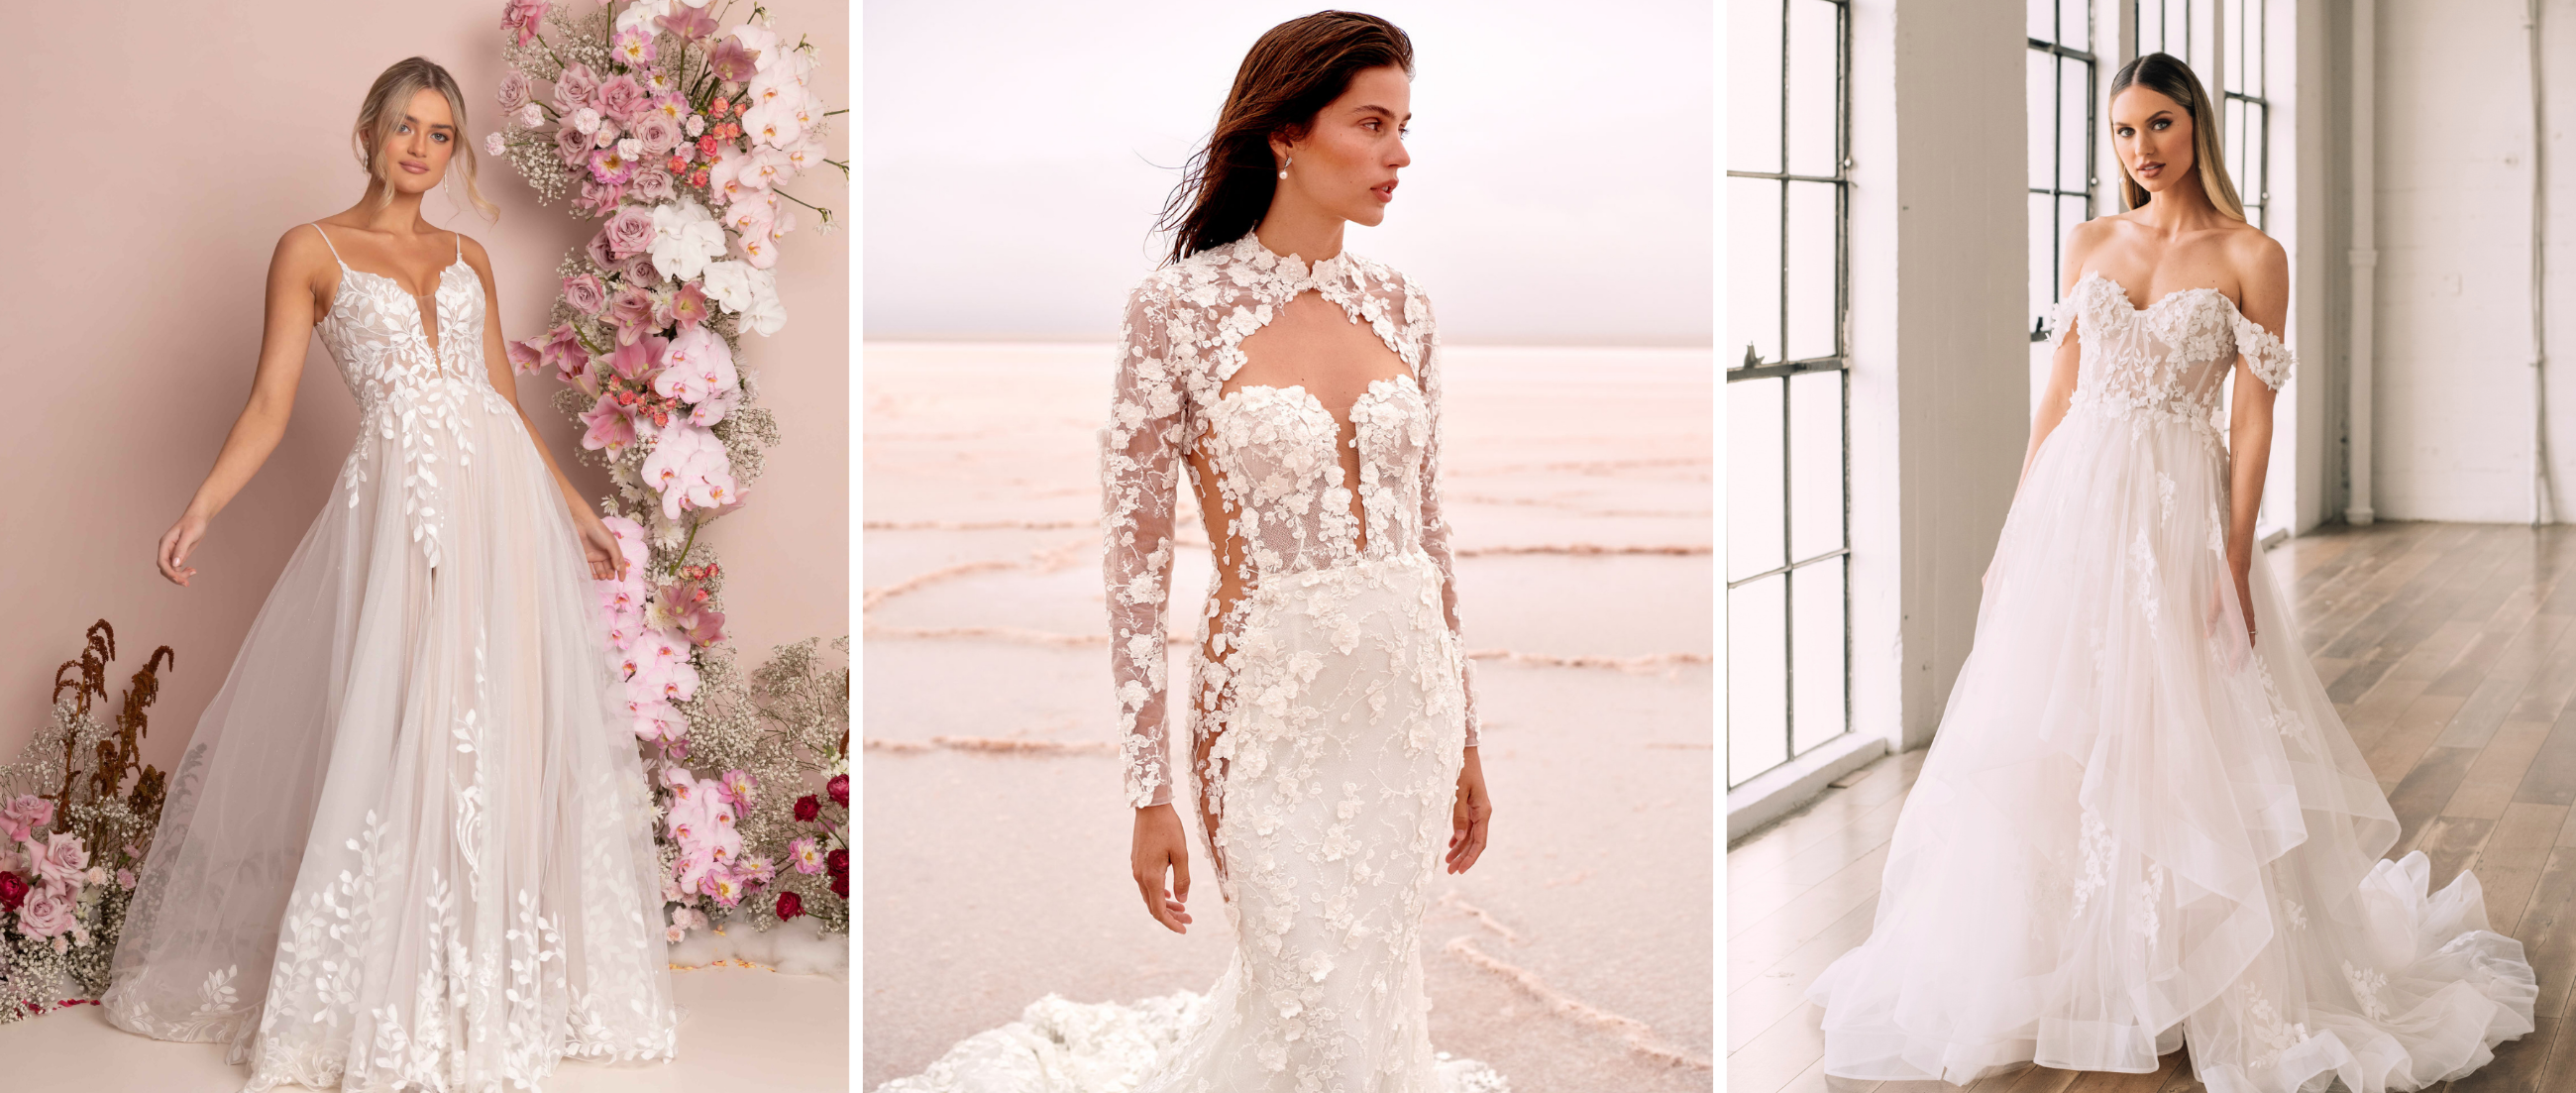 Romantic Lace Wedding Dresses Image